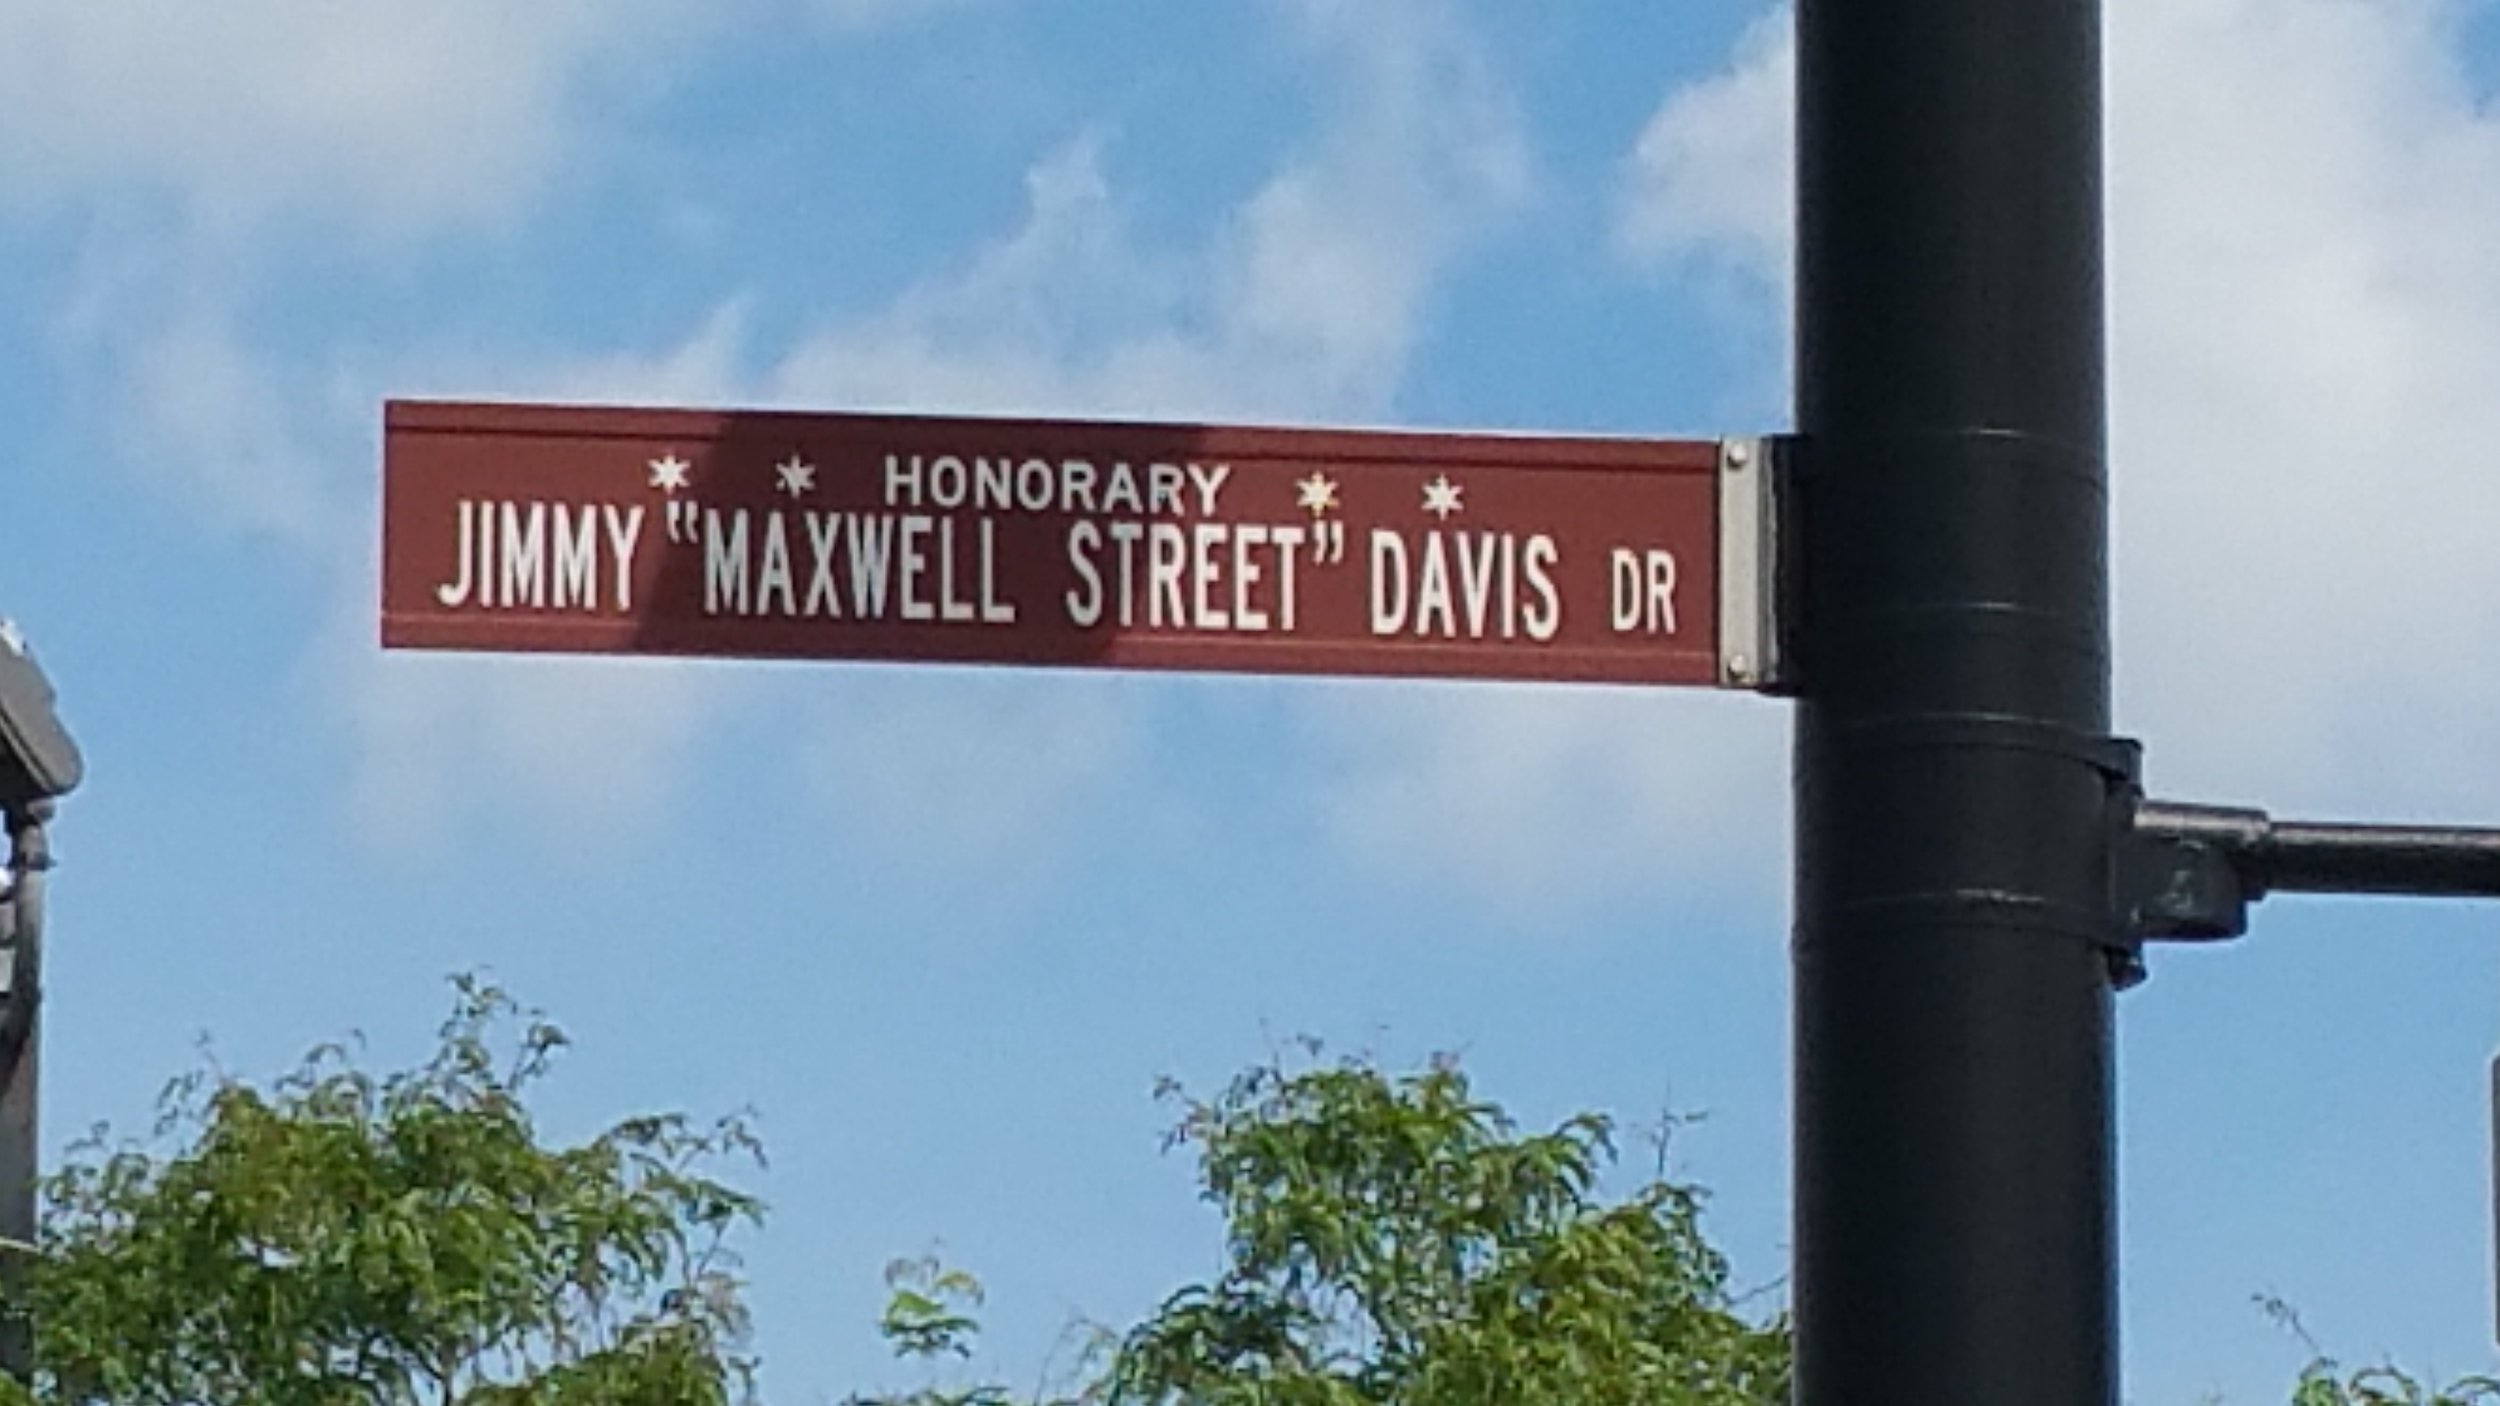 Honorary Jimmy Maxwell Street Davis Drive - Chicago.jpg